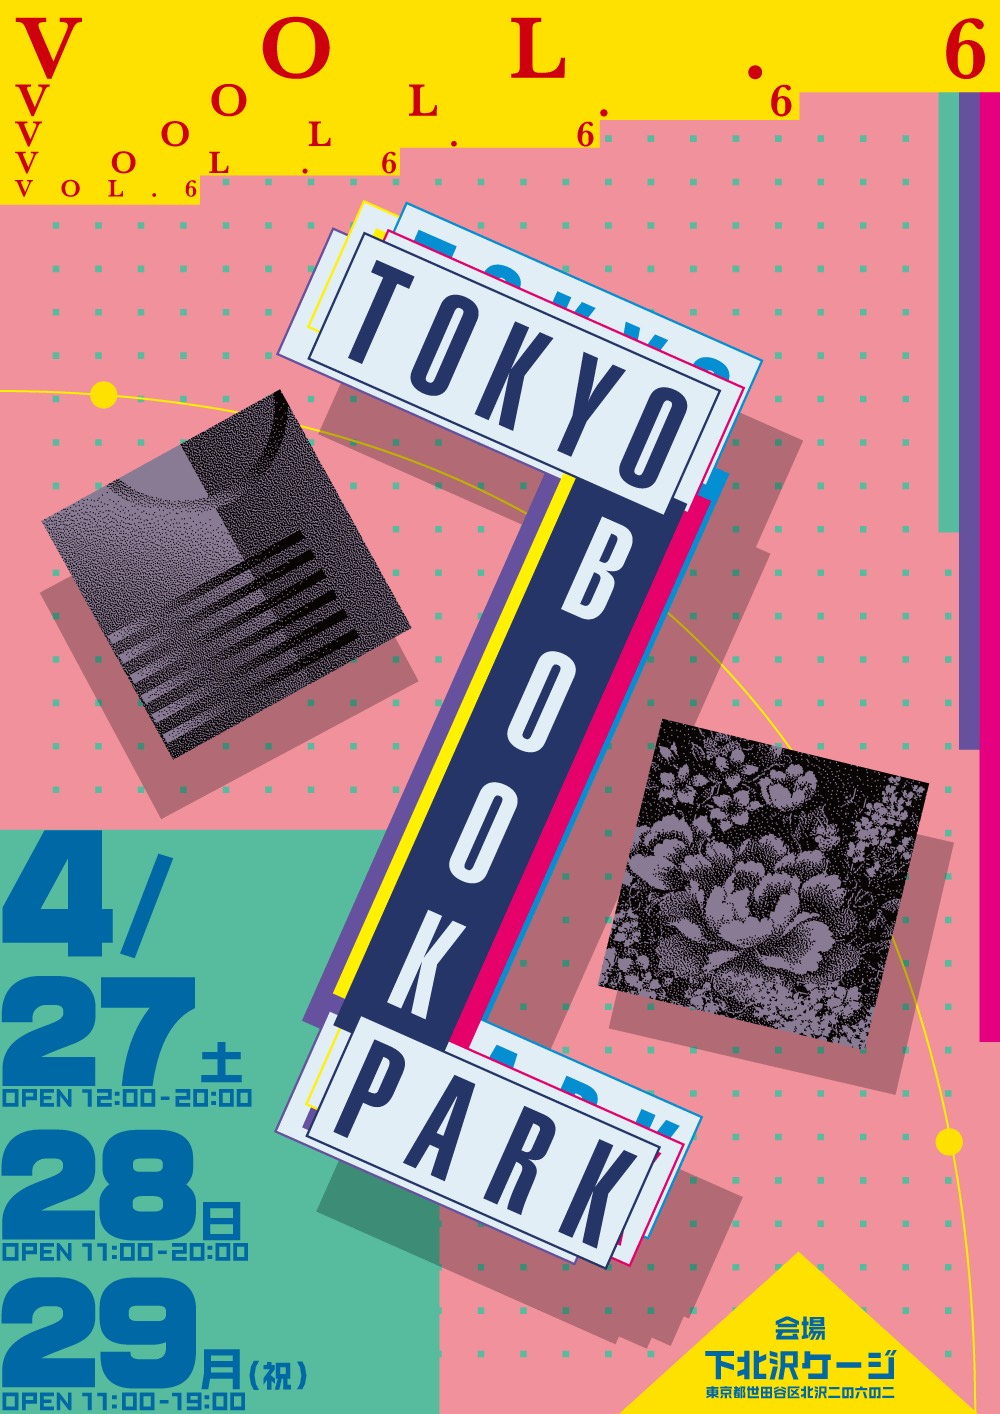 4/27(sat)TOKYO BOOK PARK vol.6 急遽参加します！